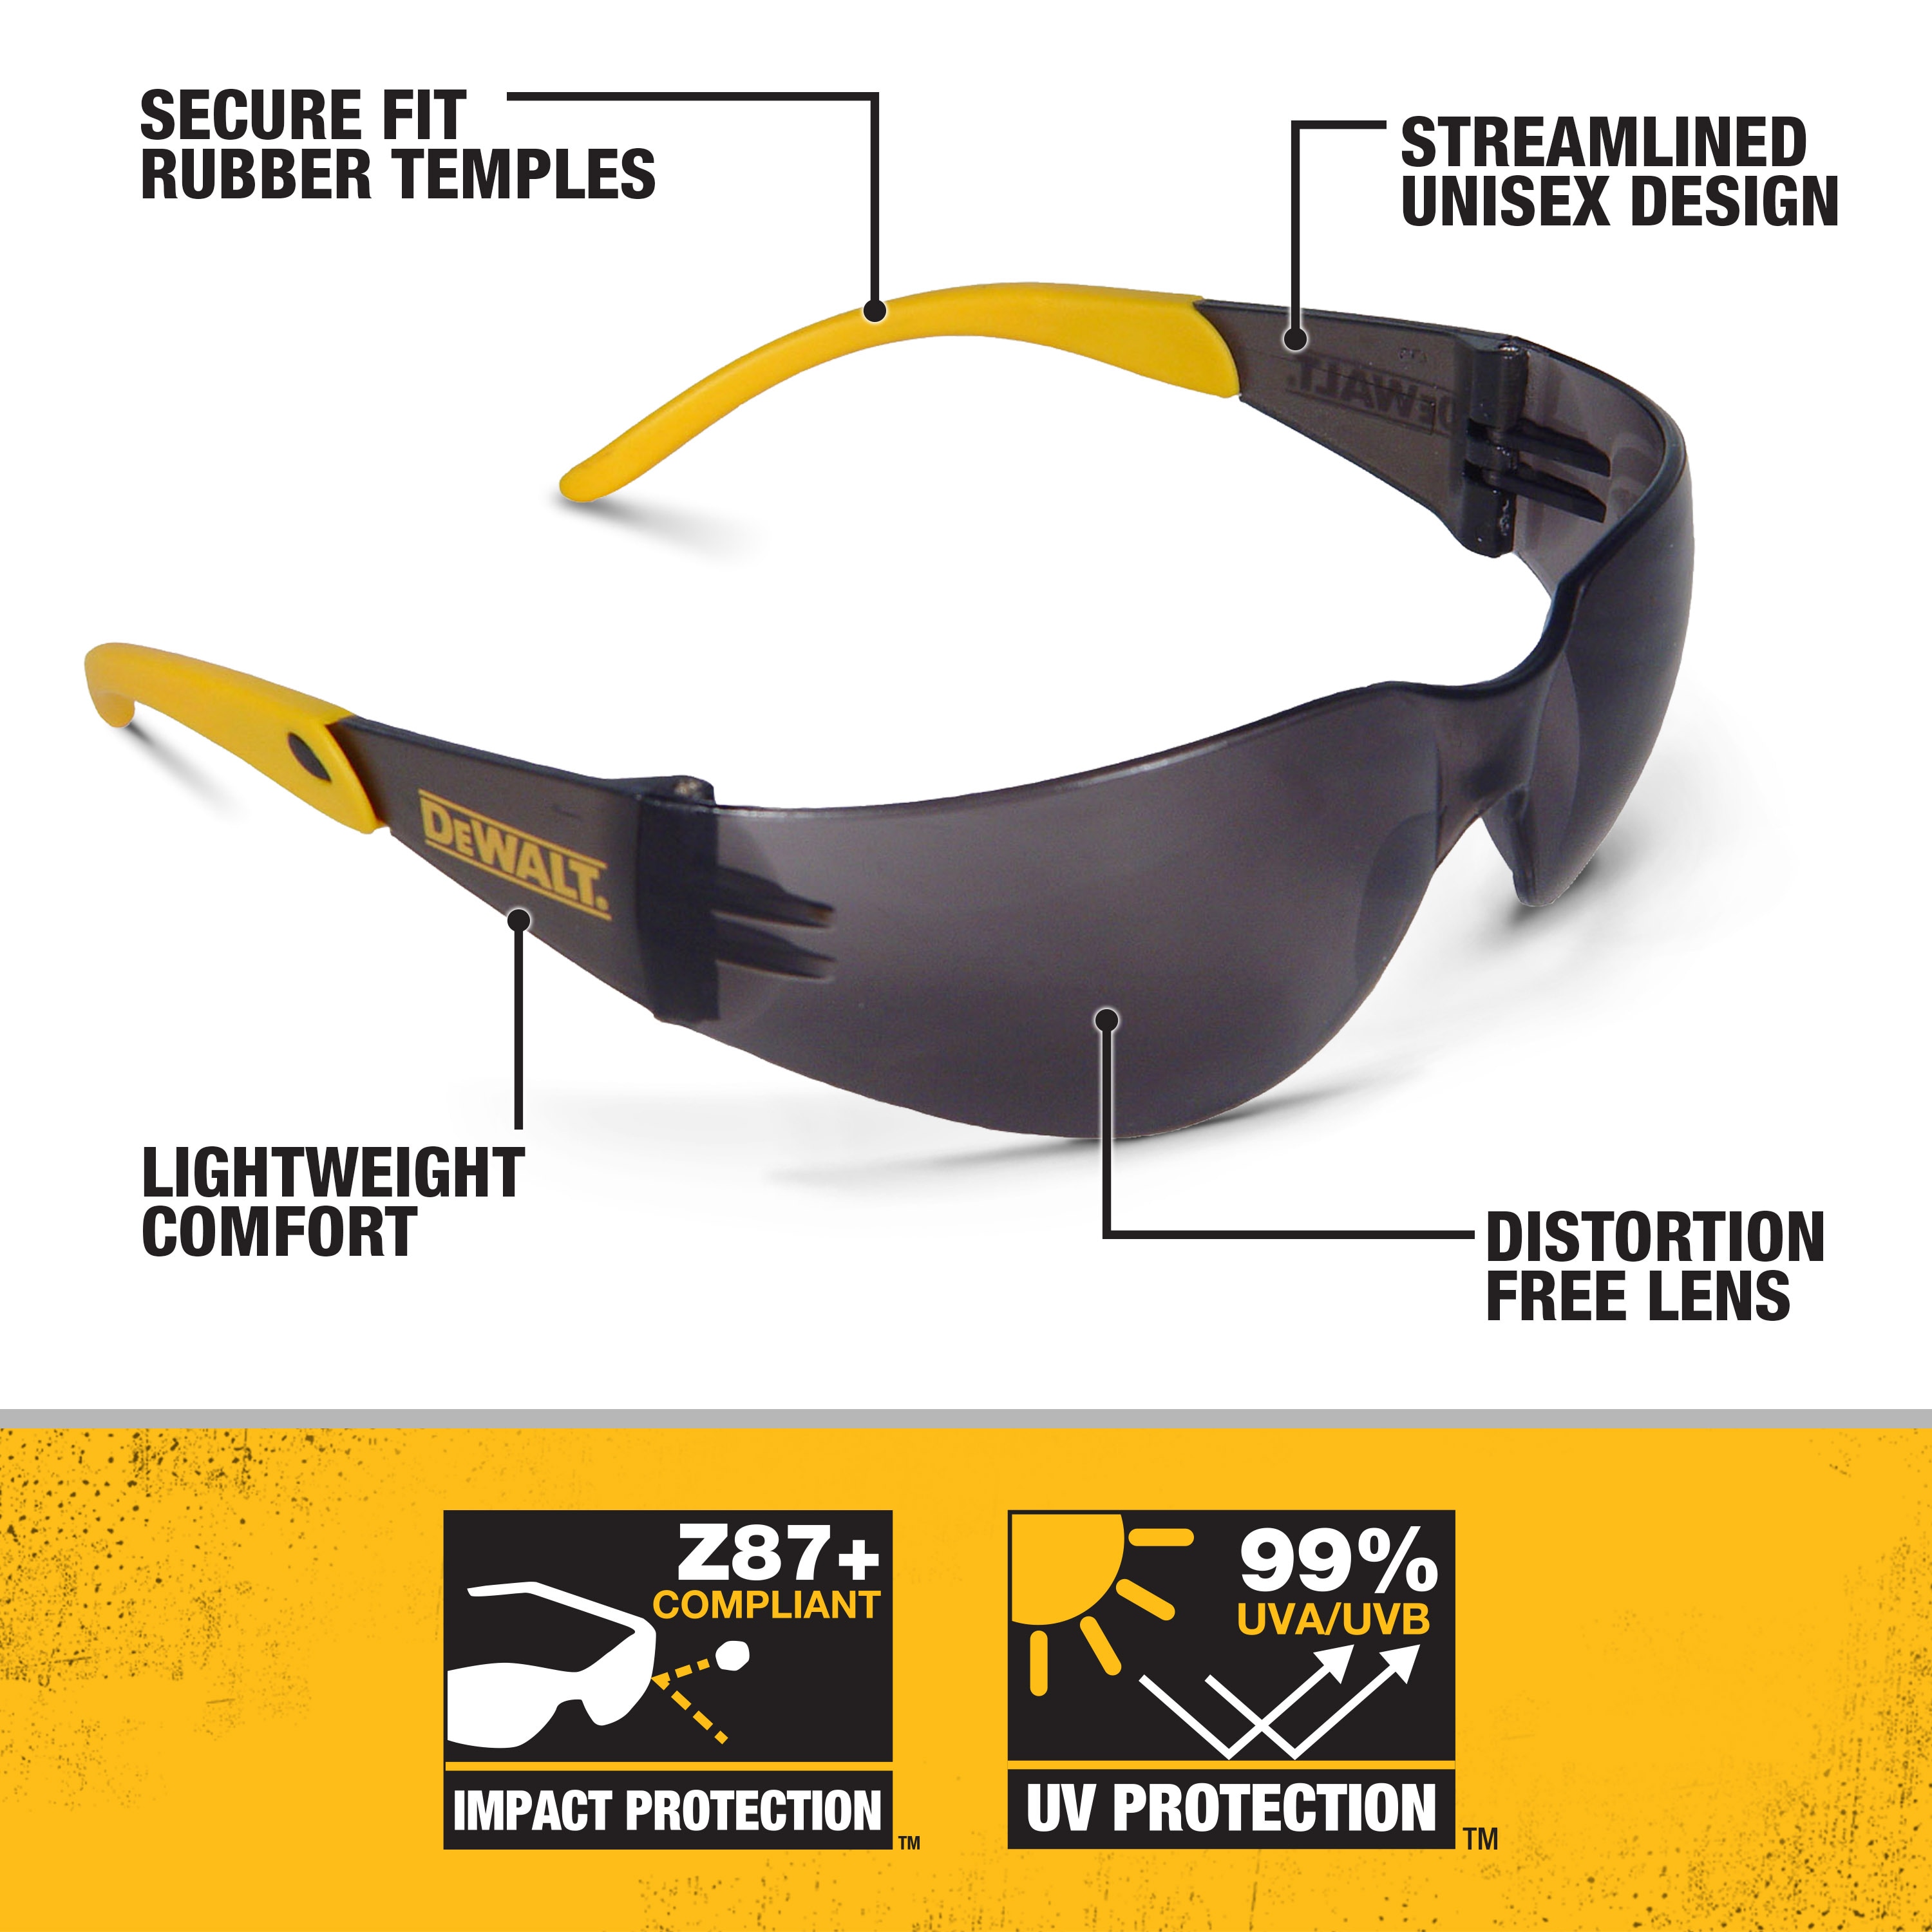 DeWALT Protector Clear Lens Protective Safety Glasses 